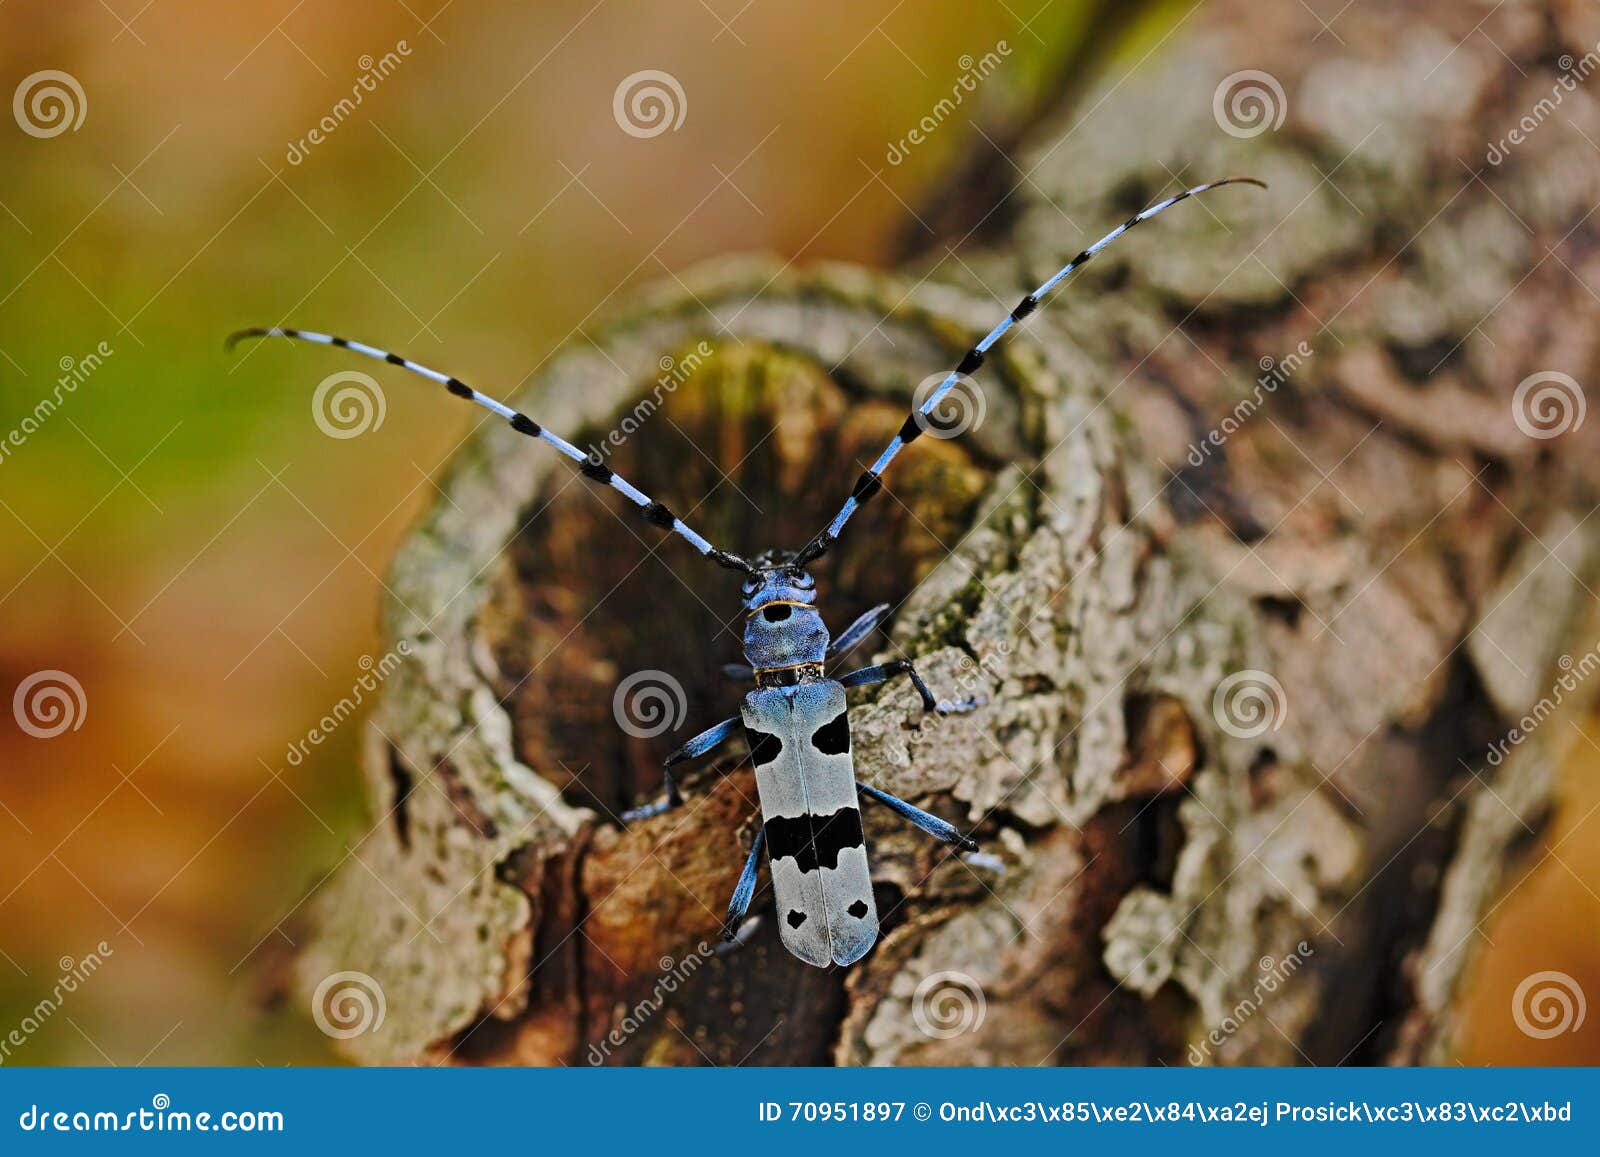 beautiful blue incest with long feelers, rosalia longicorn, rosalia alpina, in the nature green forest habitat, sitting on the